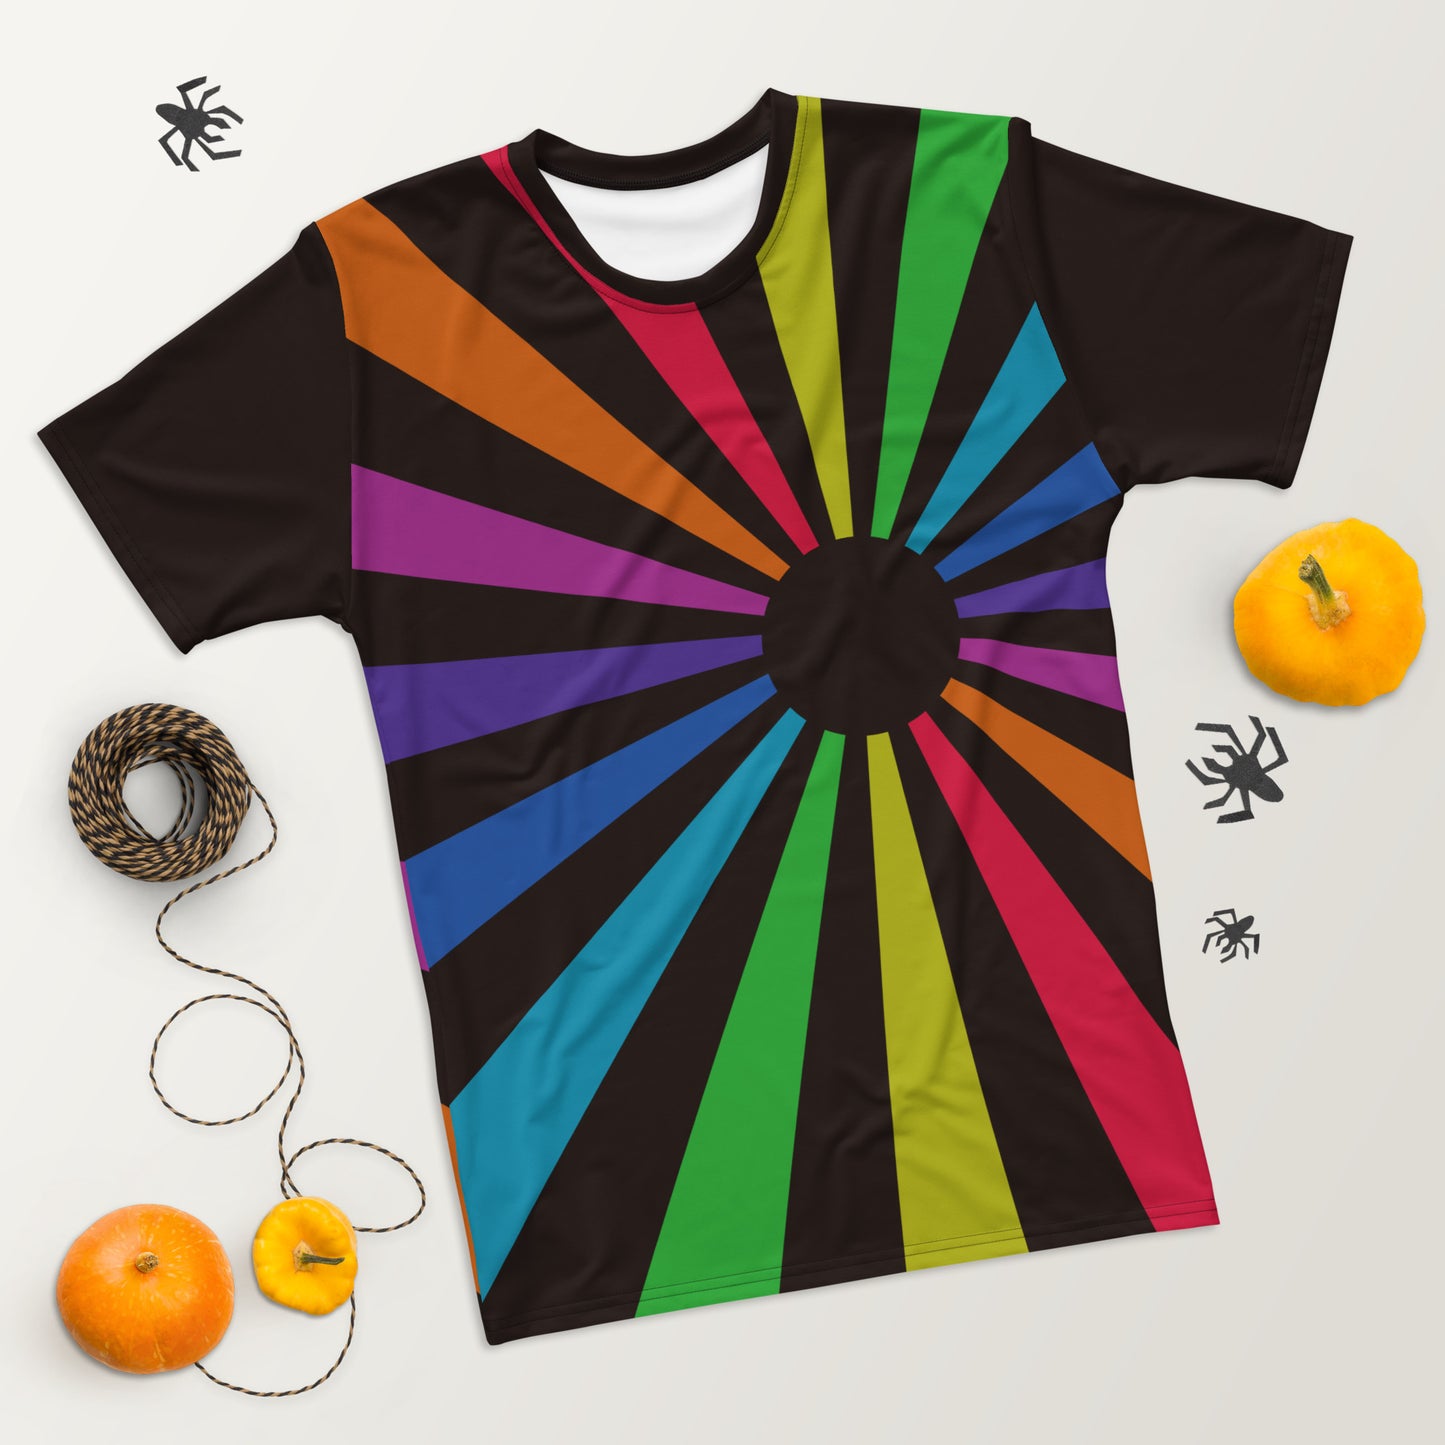 Men's T-shirt "Black Rainbowrise"